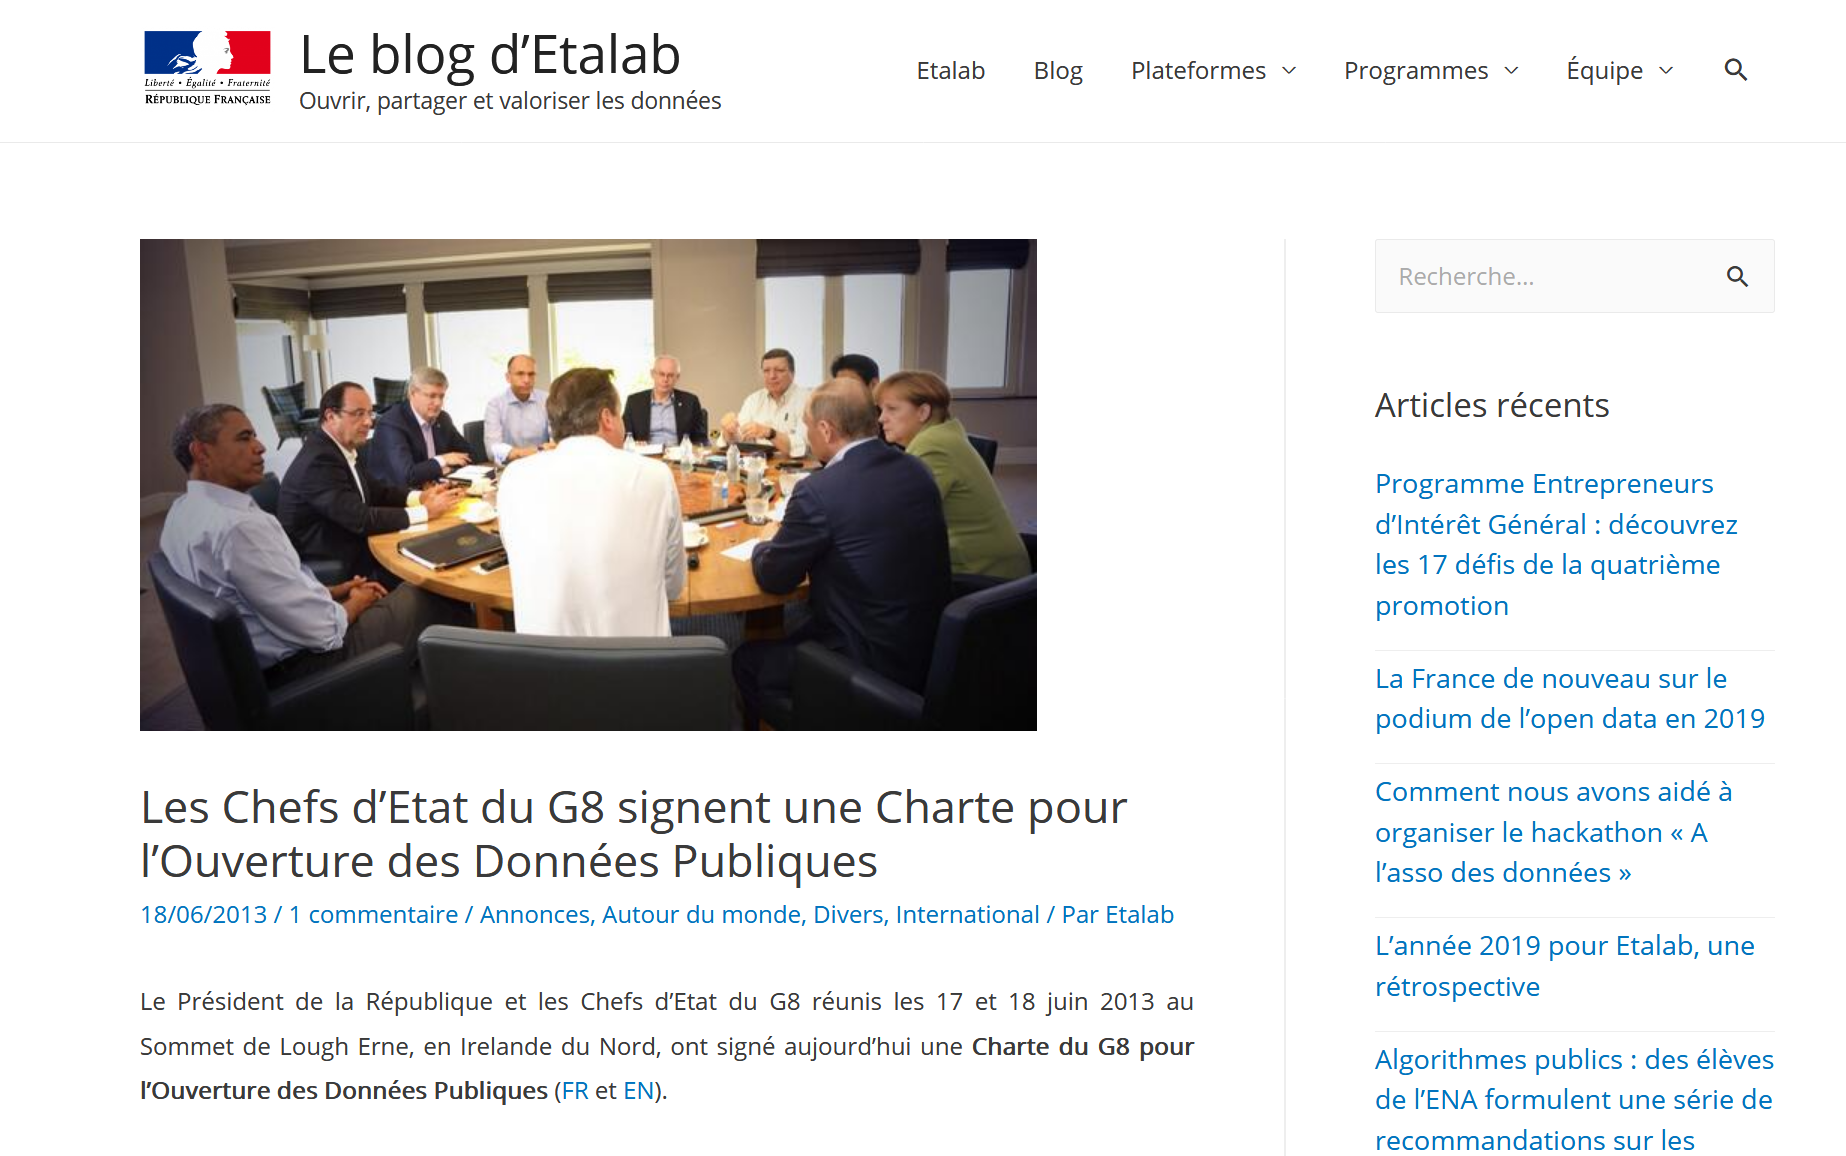 Le blog Etalab - Charte